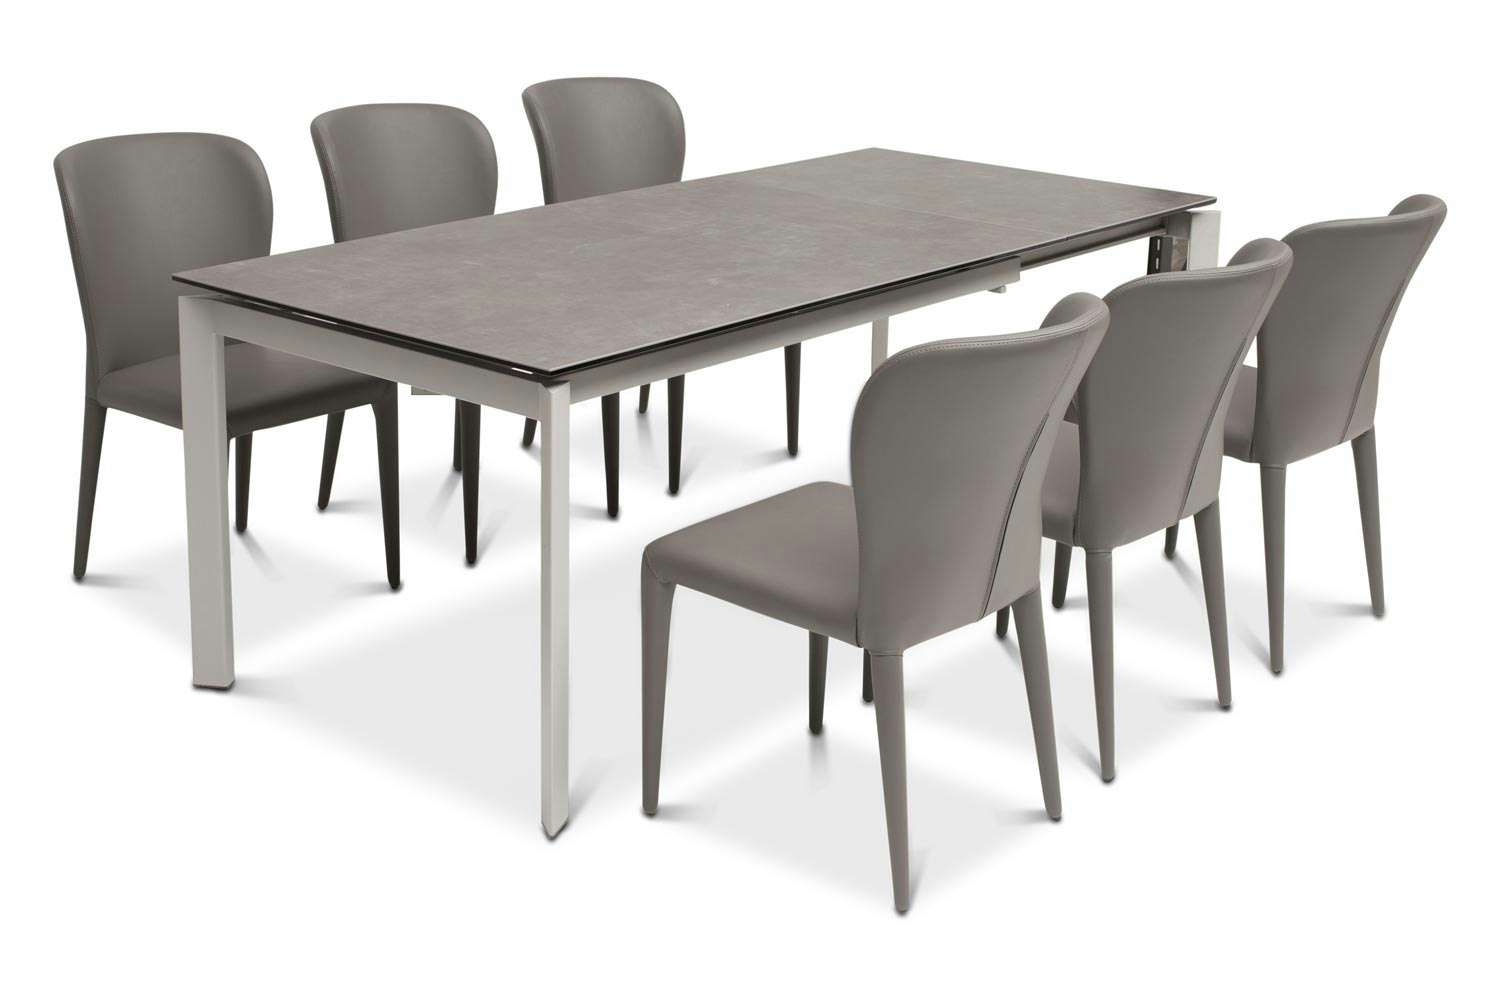 Https Wwwharvey Normancouk Furniture Dining Furniture Dining Sets Callisto Dining Table Dark With 6 Aletta Chairs Dark Greyhtml